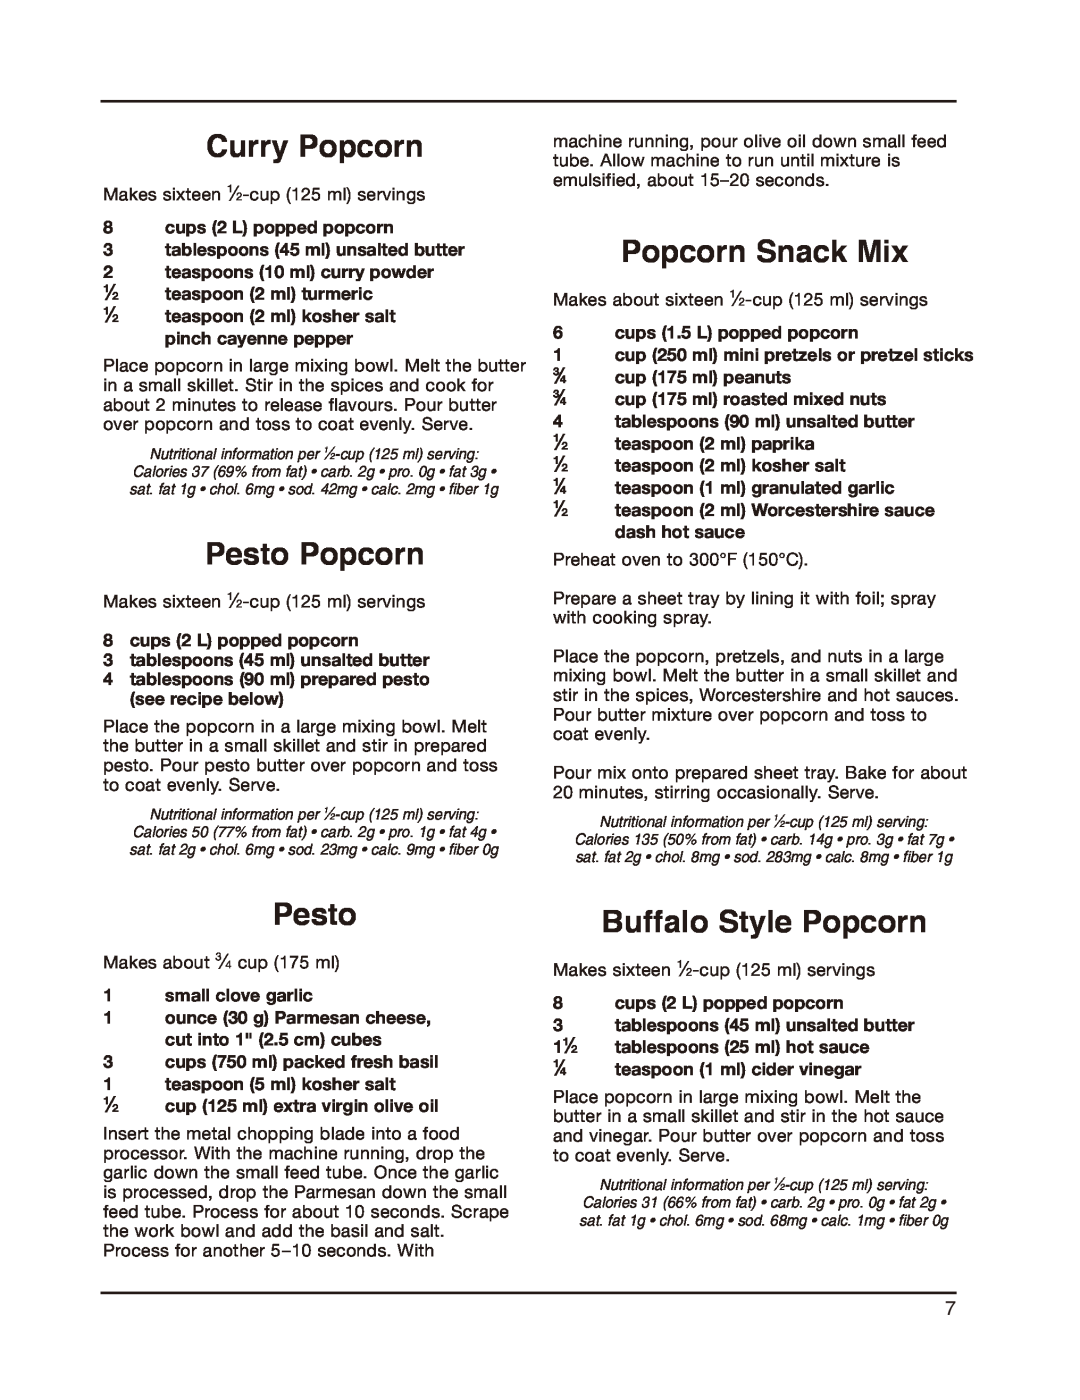 Cuisinart CPM-800C manual Curry Popcorn, Pesto Popcorn, Popcorn Snack Mix, Buffalo Style Popcorn 